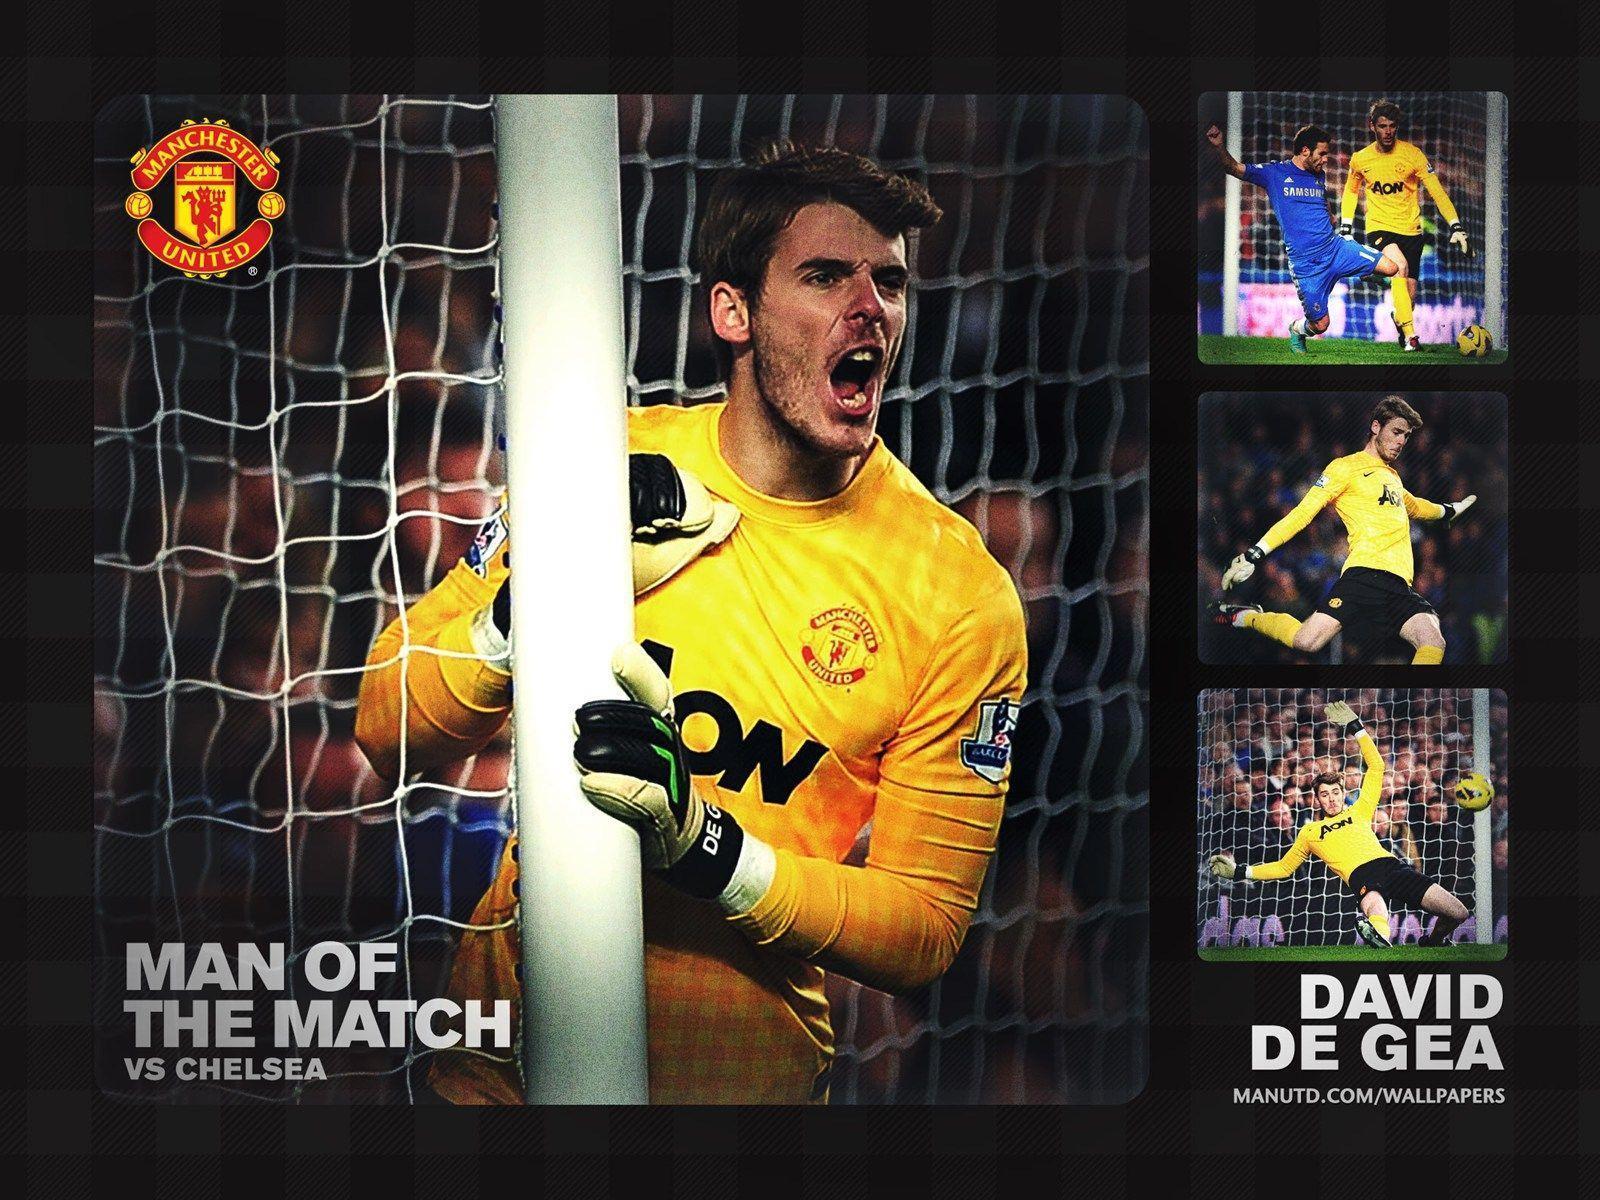 Manchester United David De Gea is the man of the match wallpaper